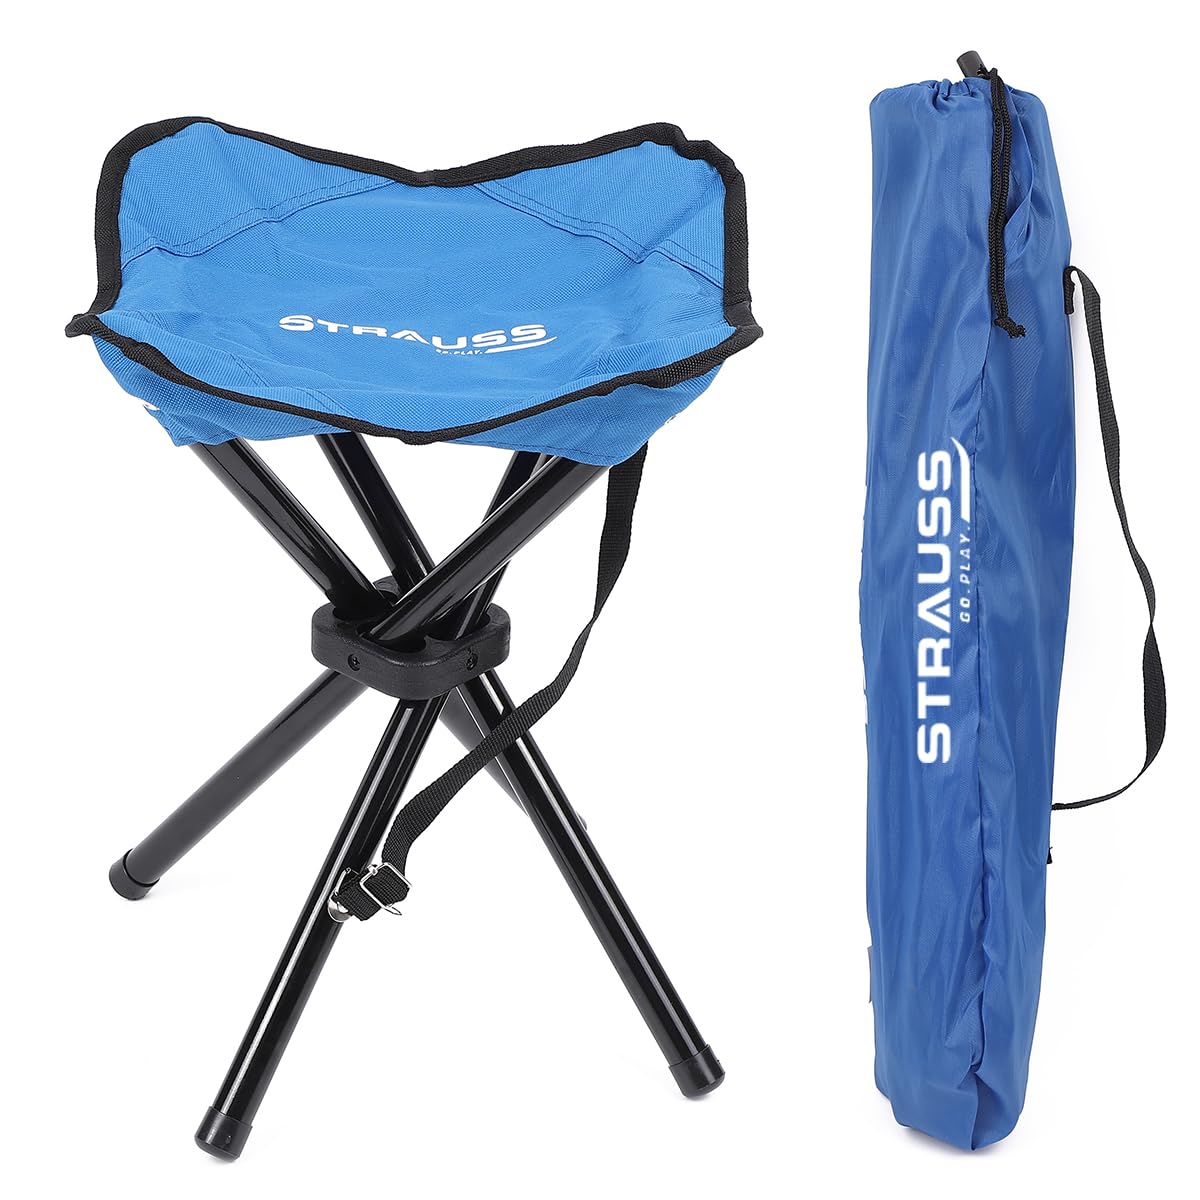 STRAUSS Folding Camping Chair | Portable & Foldable Stool | Portable Chair for Camping, Fishing, Hiking, Gardening and Beach 4 Leg Chair (Blue)